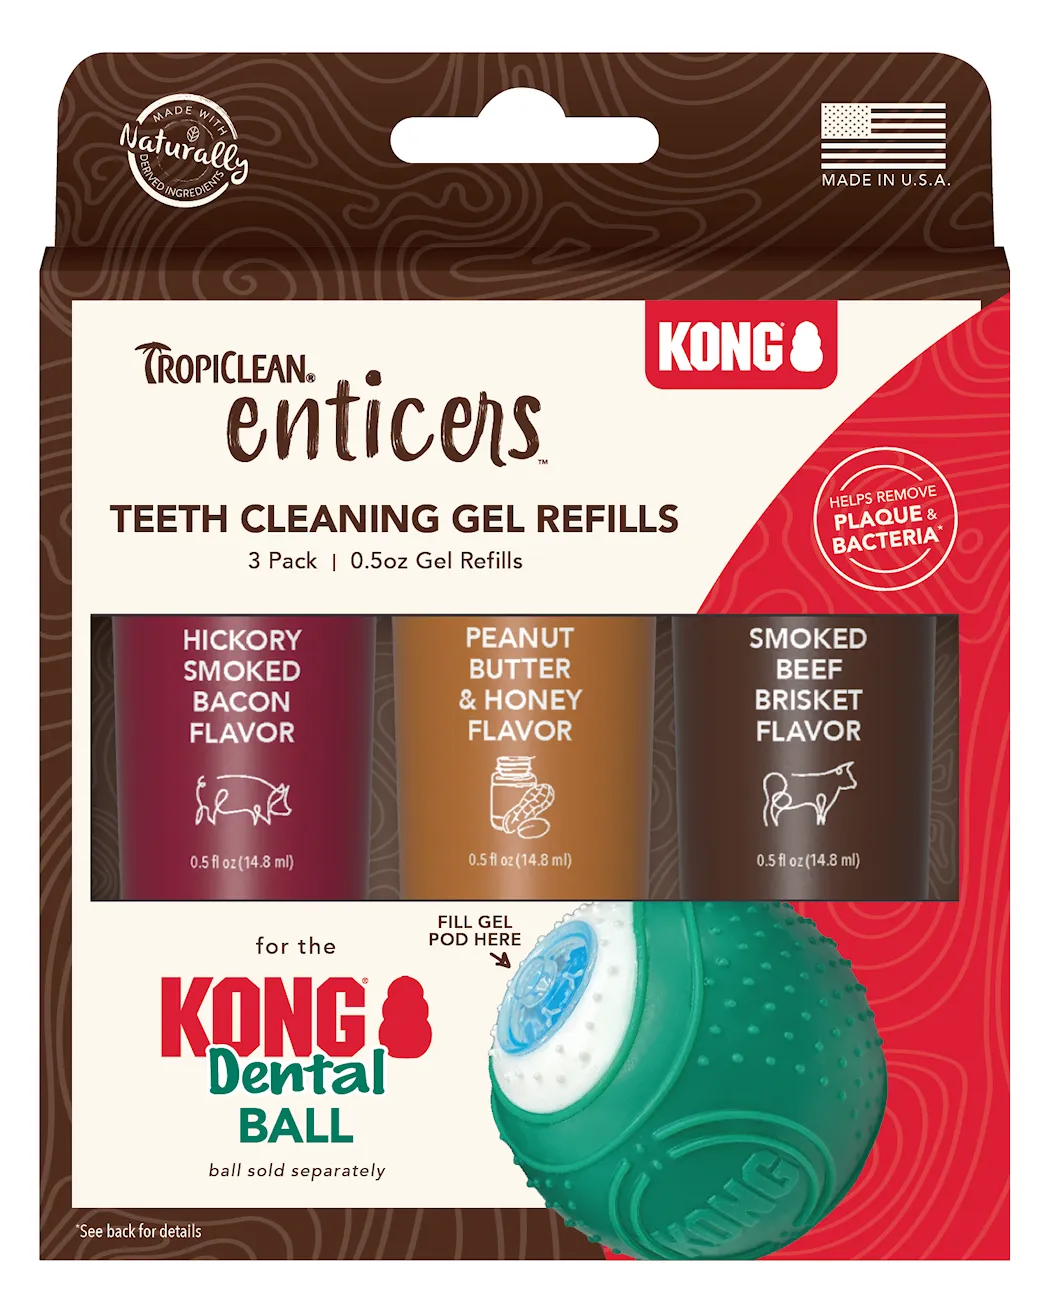 TropiClean Enticers Teeth Cleaning Gel Variety Pack for KONG Dental Ball 3-pack